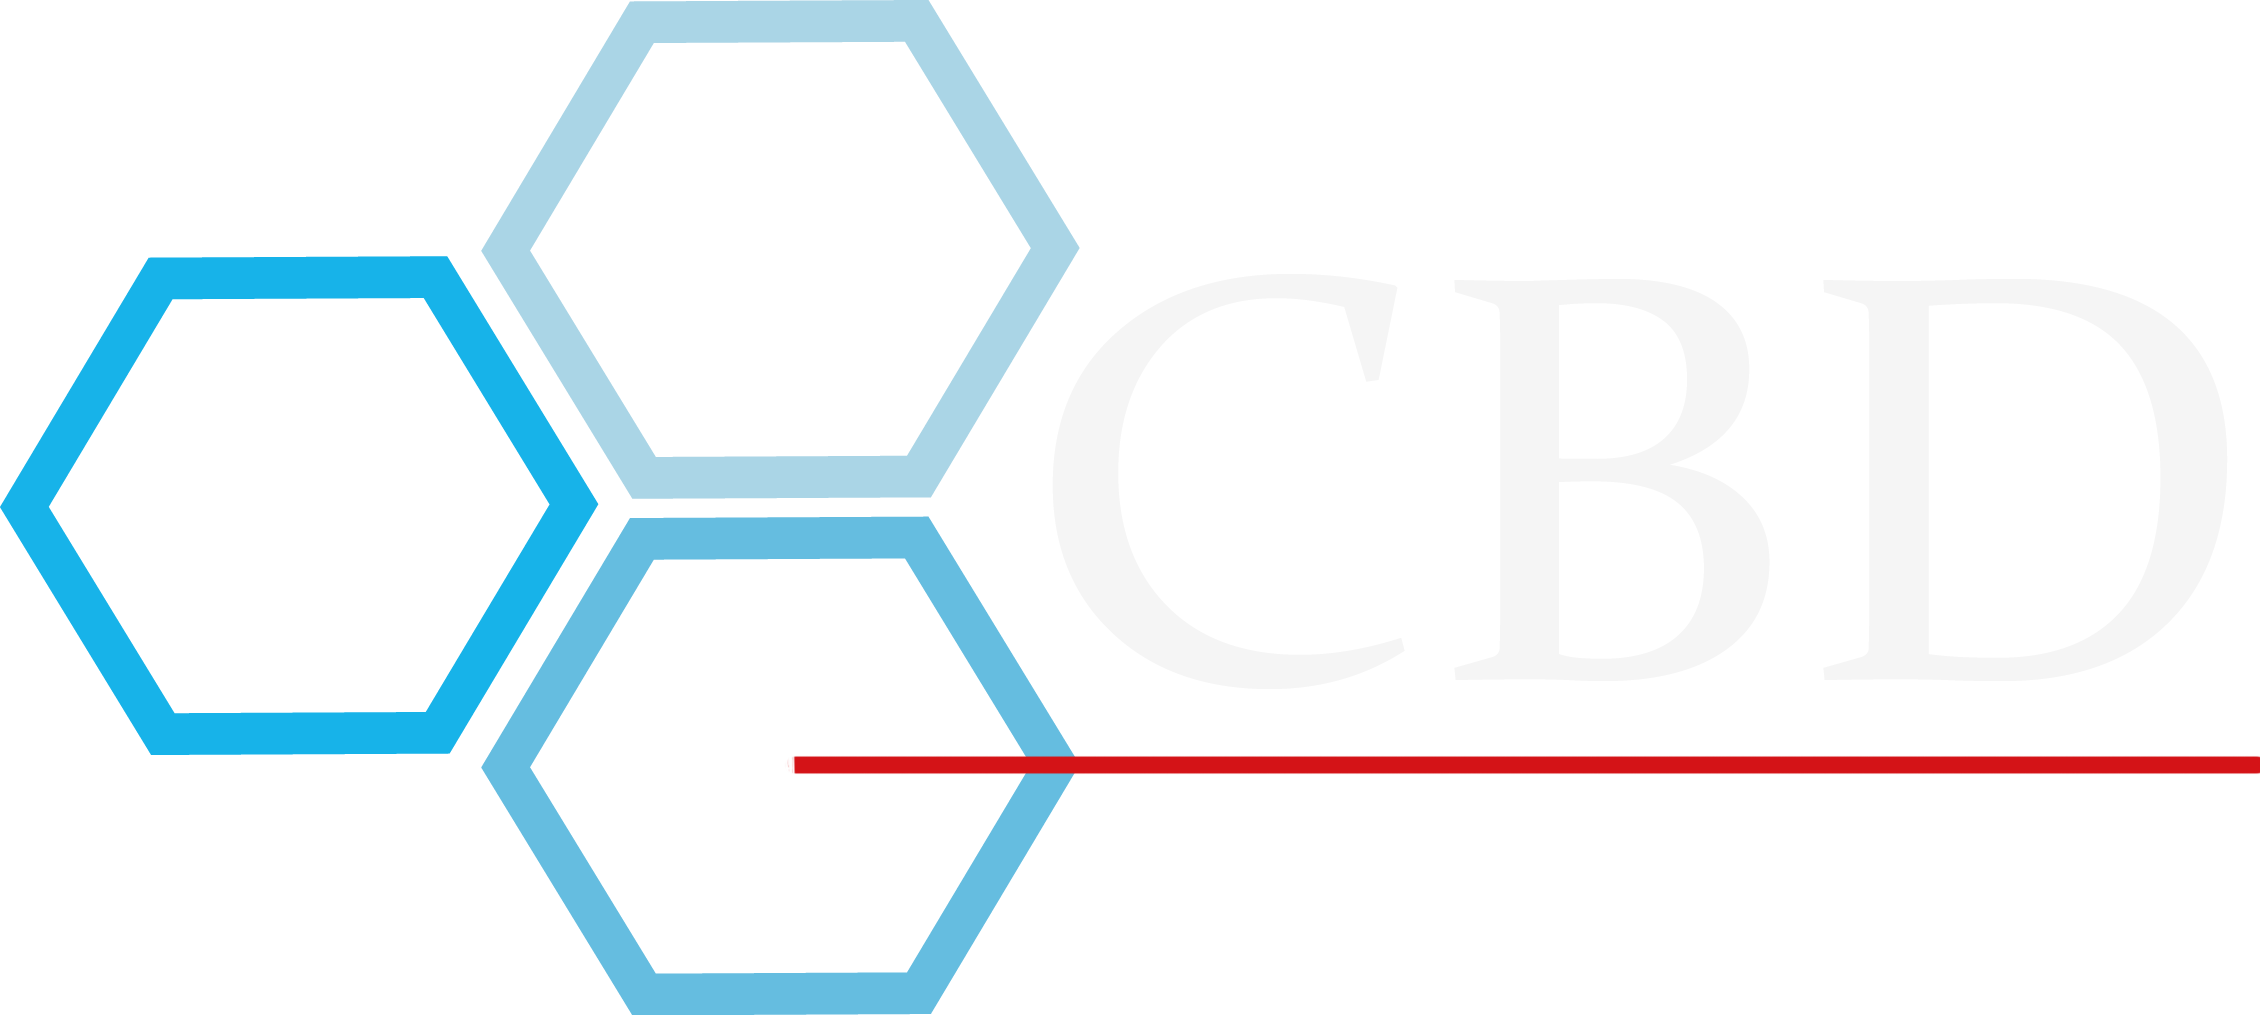 CBD: Cellular Basis of Diseases